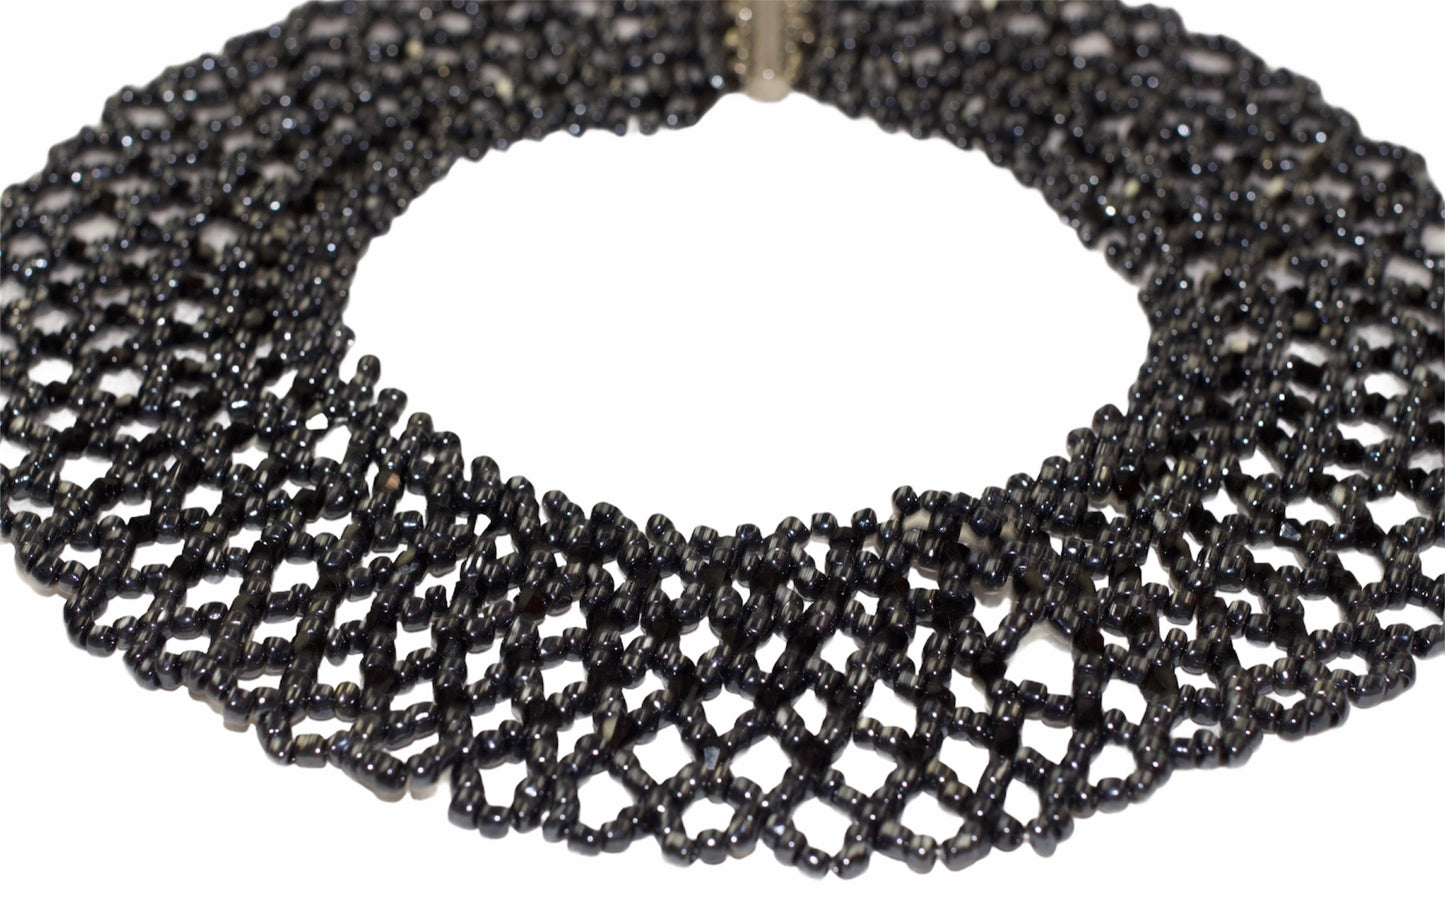 Black Netting Collar Necklace